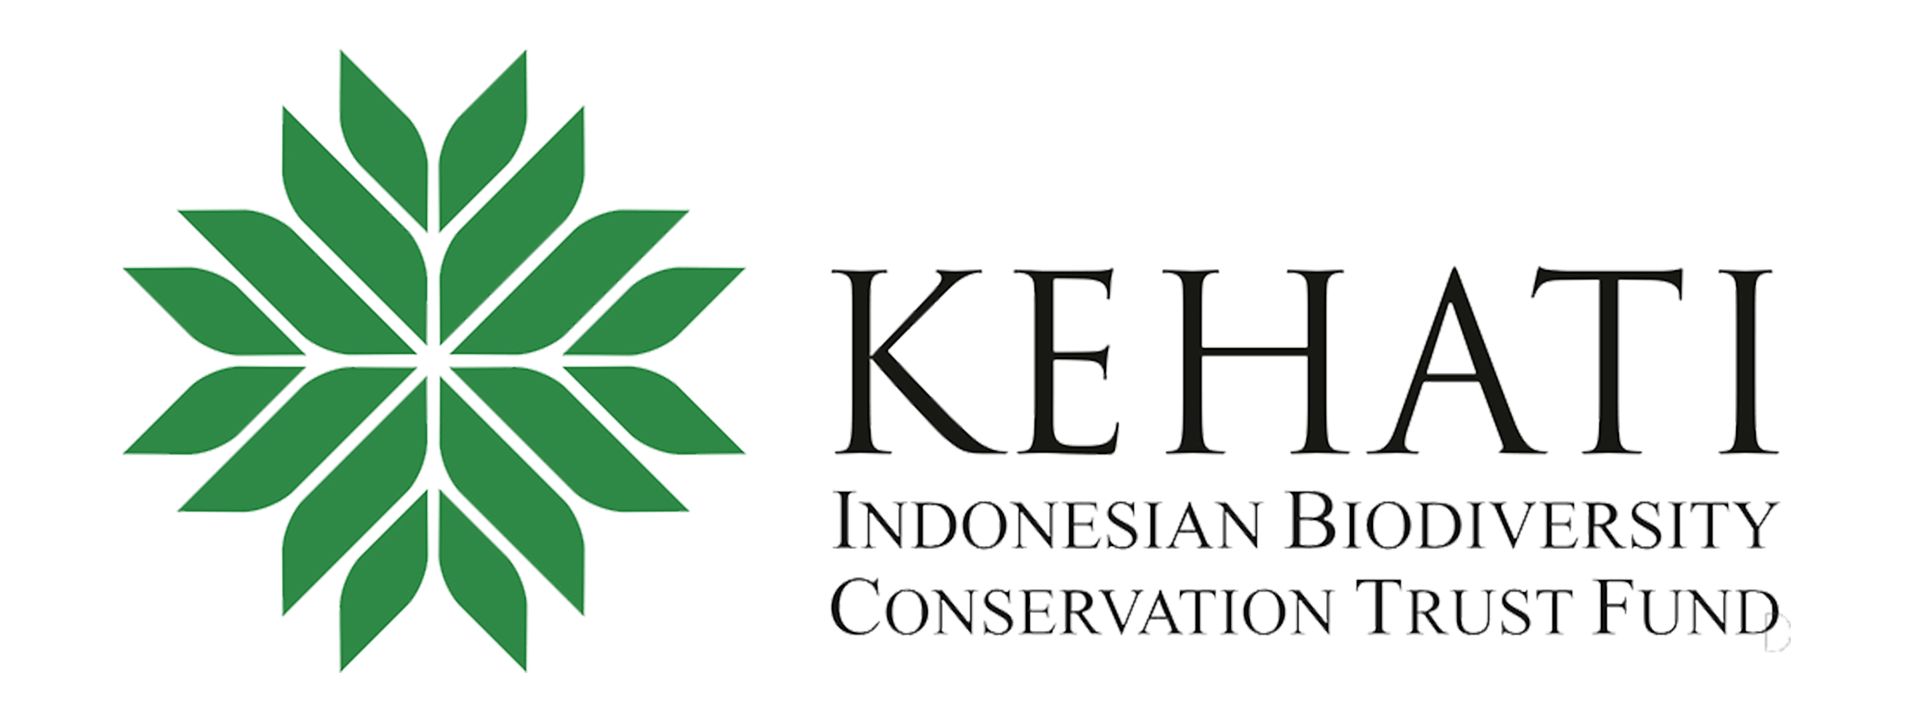 KEHATI Award 2020; “Promoting Biodiversity Heroes”